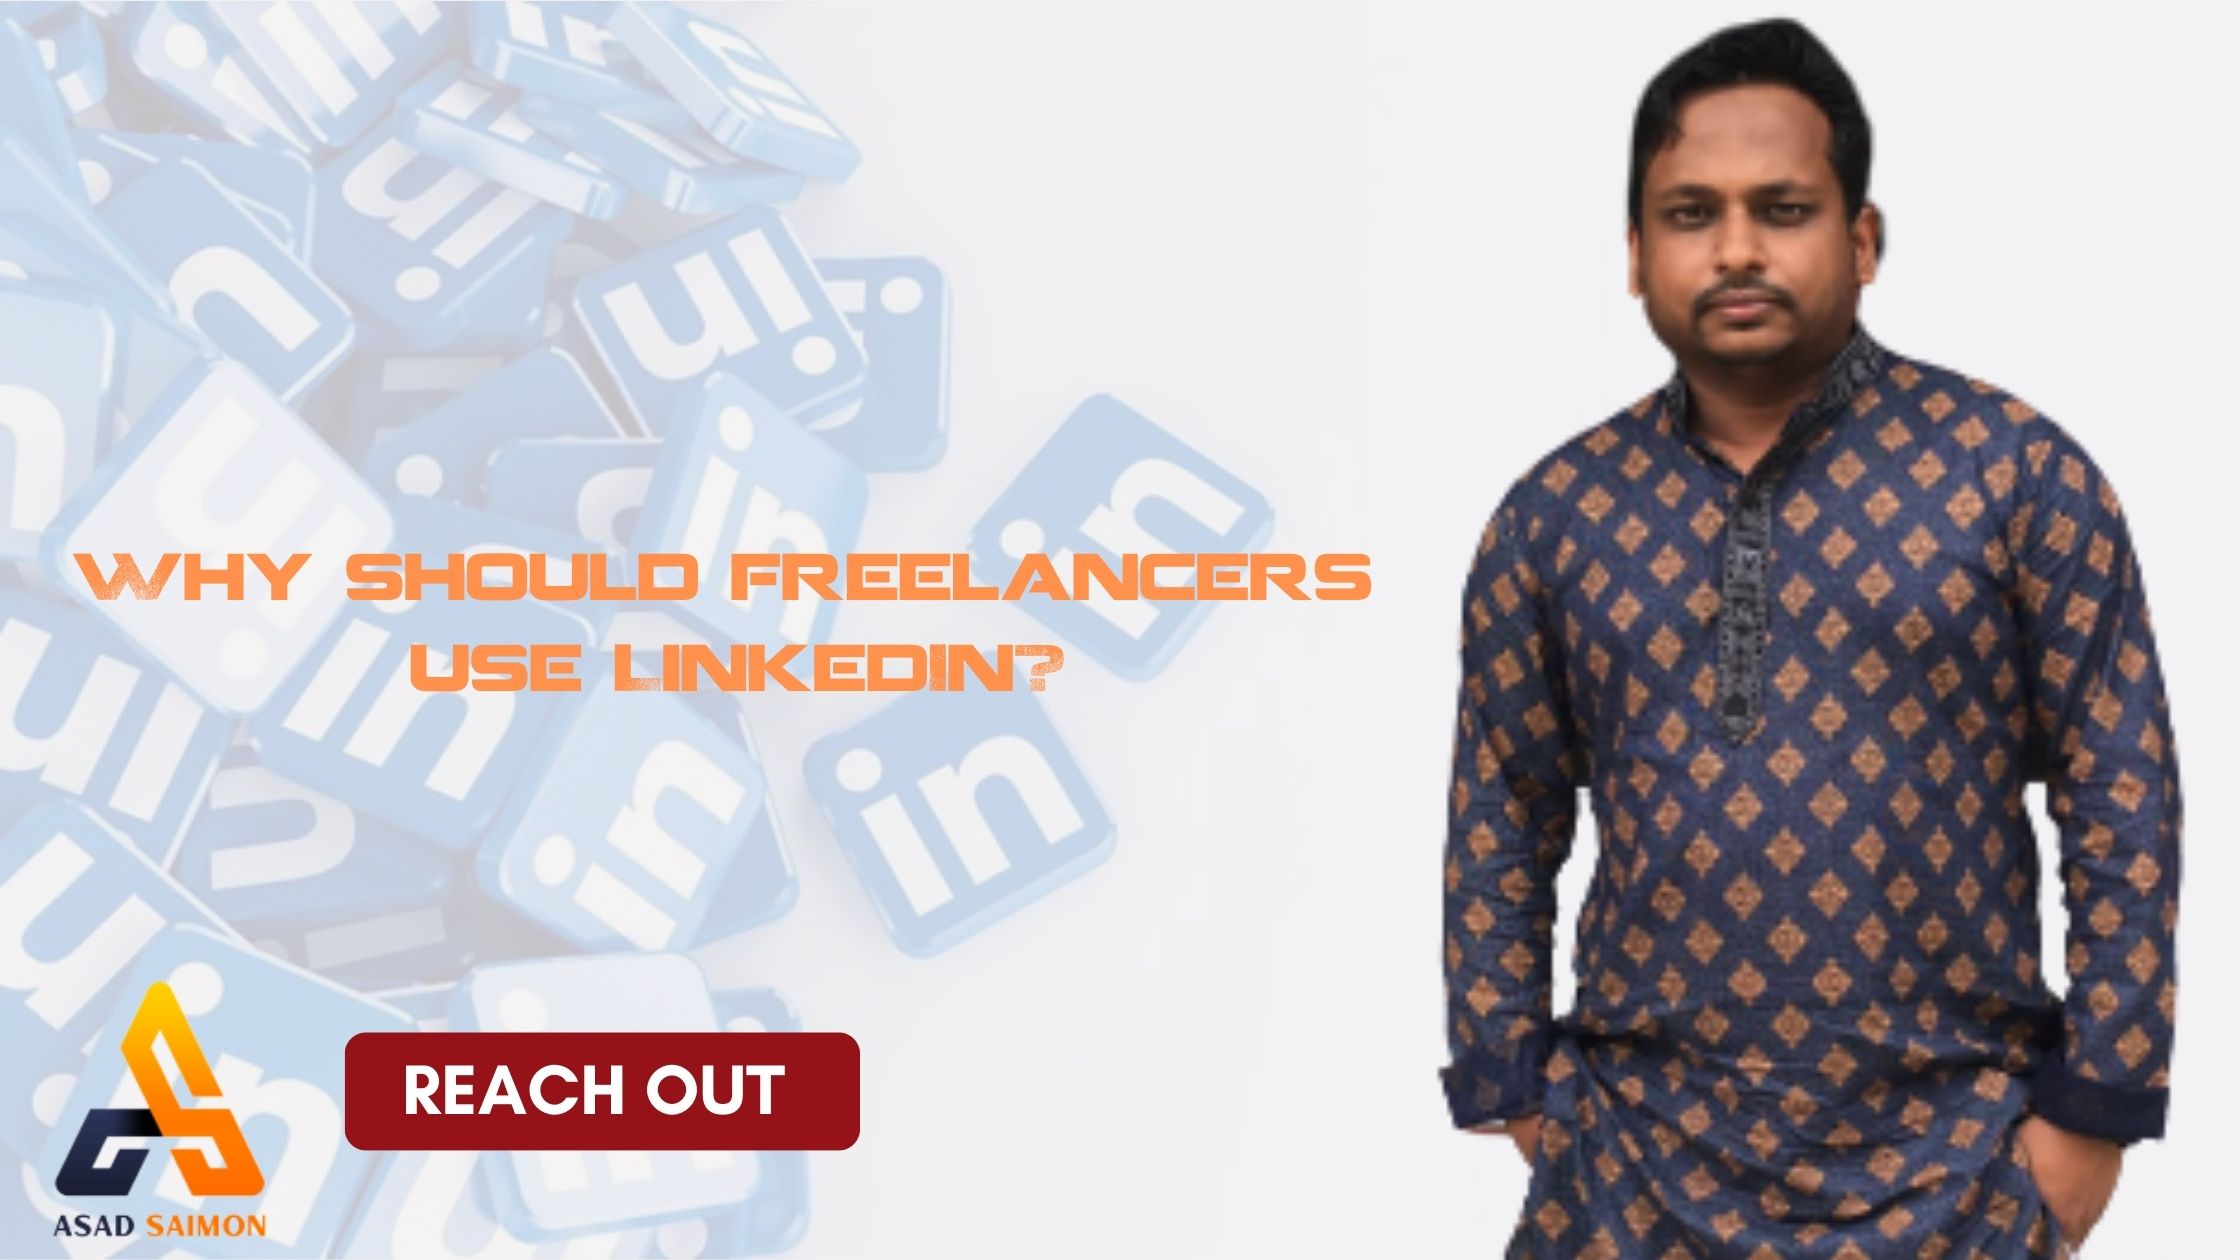 Why should freelancers use LinkedIn?